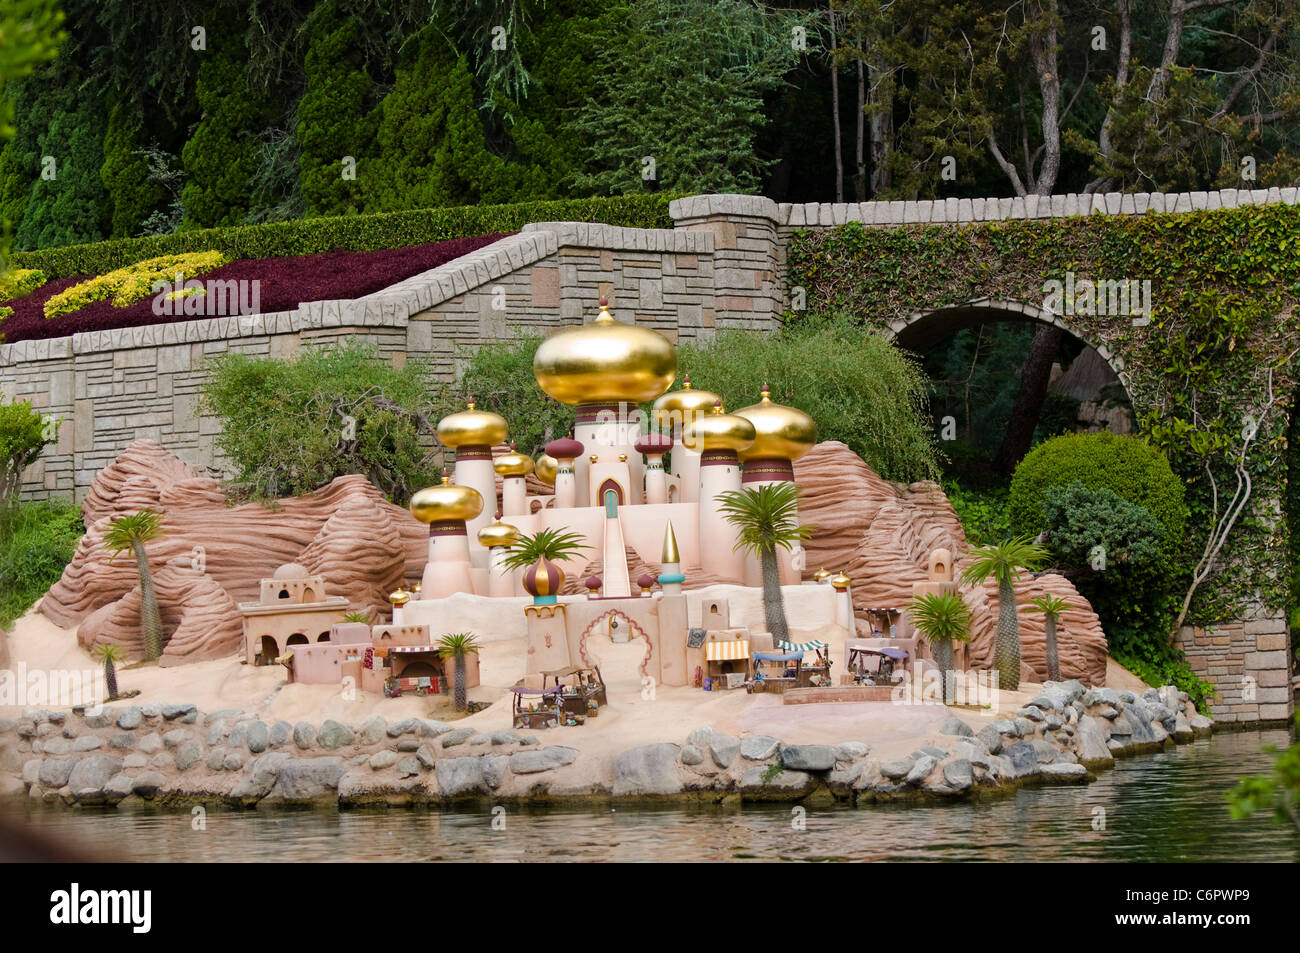 Aladdin Castle at Disneyland Amusement Park in California USA Stock Photo